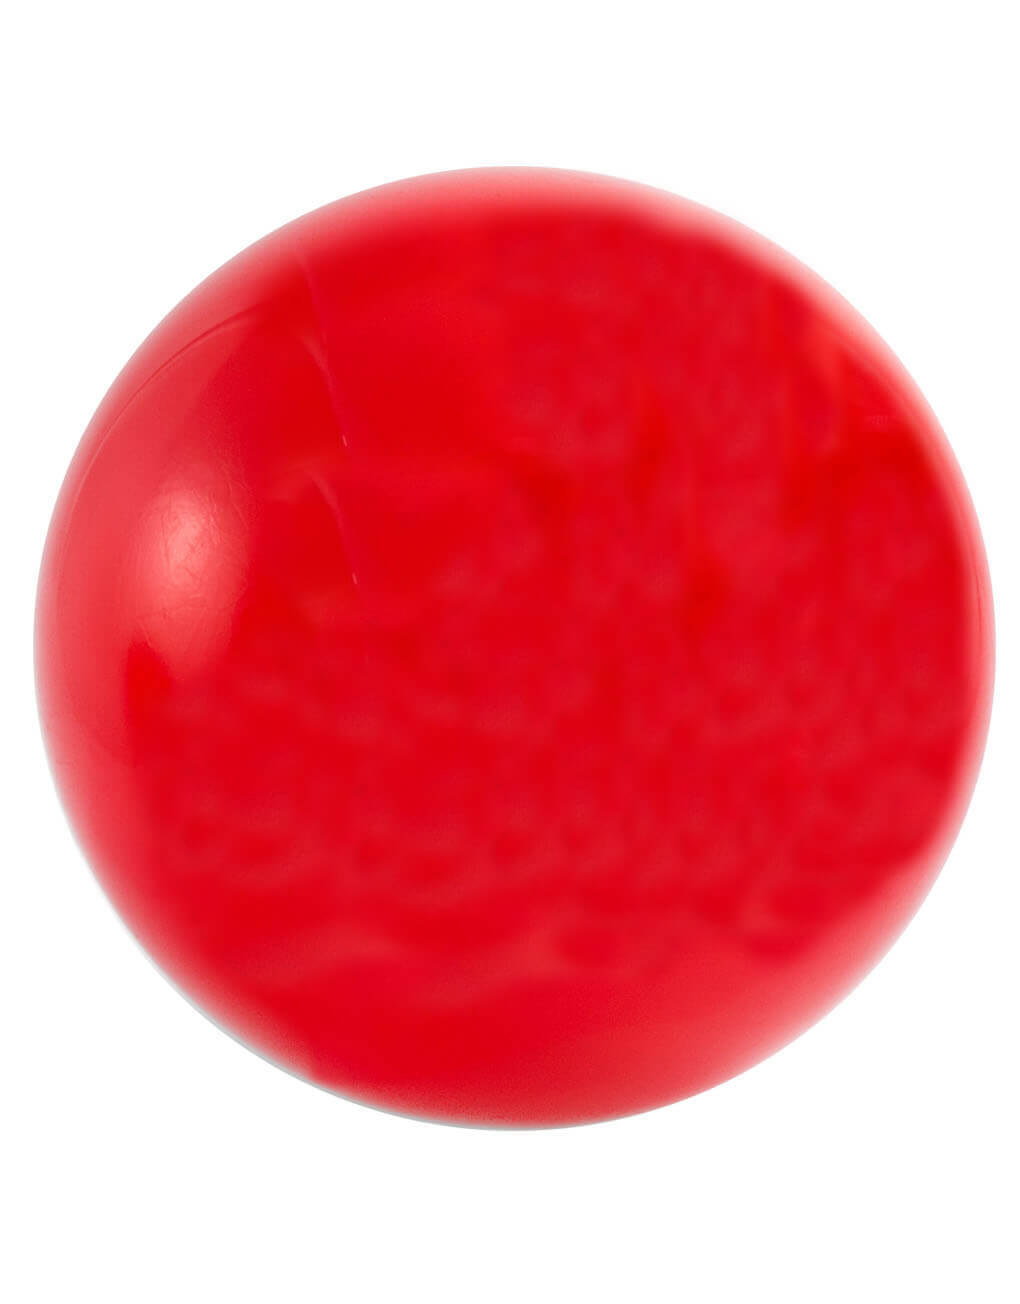 Красный шар солнца уплывал. Красный мяч. Красный горячий шар. Красный шар солнца. Презелёный красный шар.